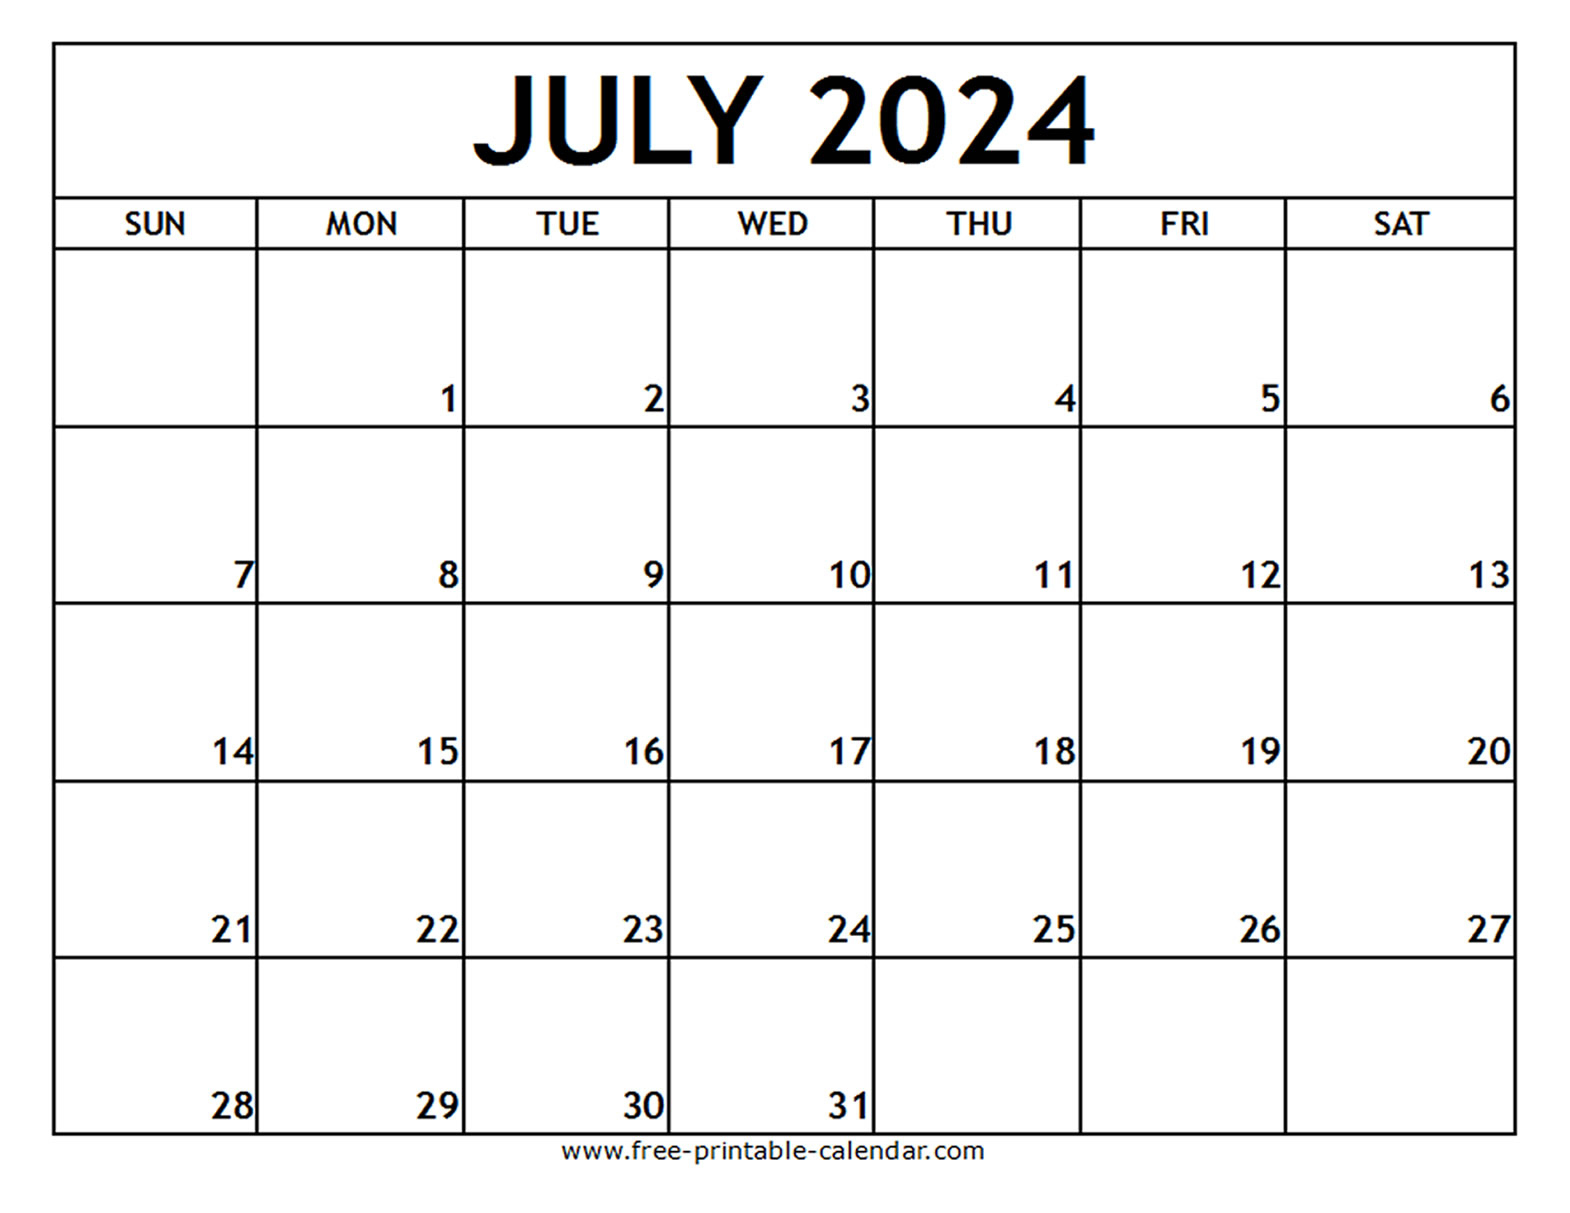 July 2024 Printable Calendar - Free-Printable-Calendar | Free Printable Calendar 2024 July